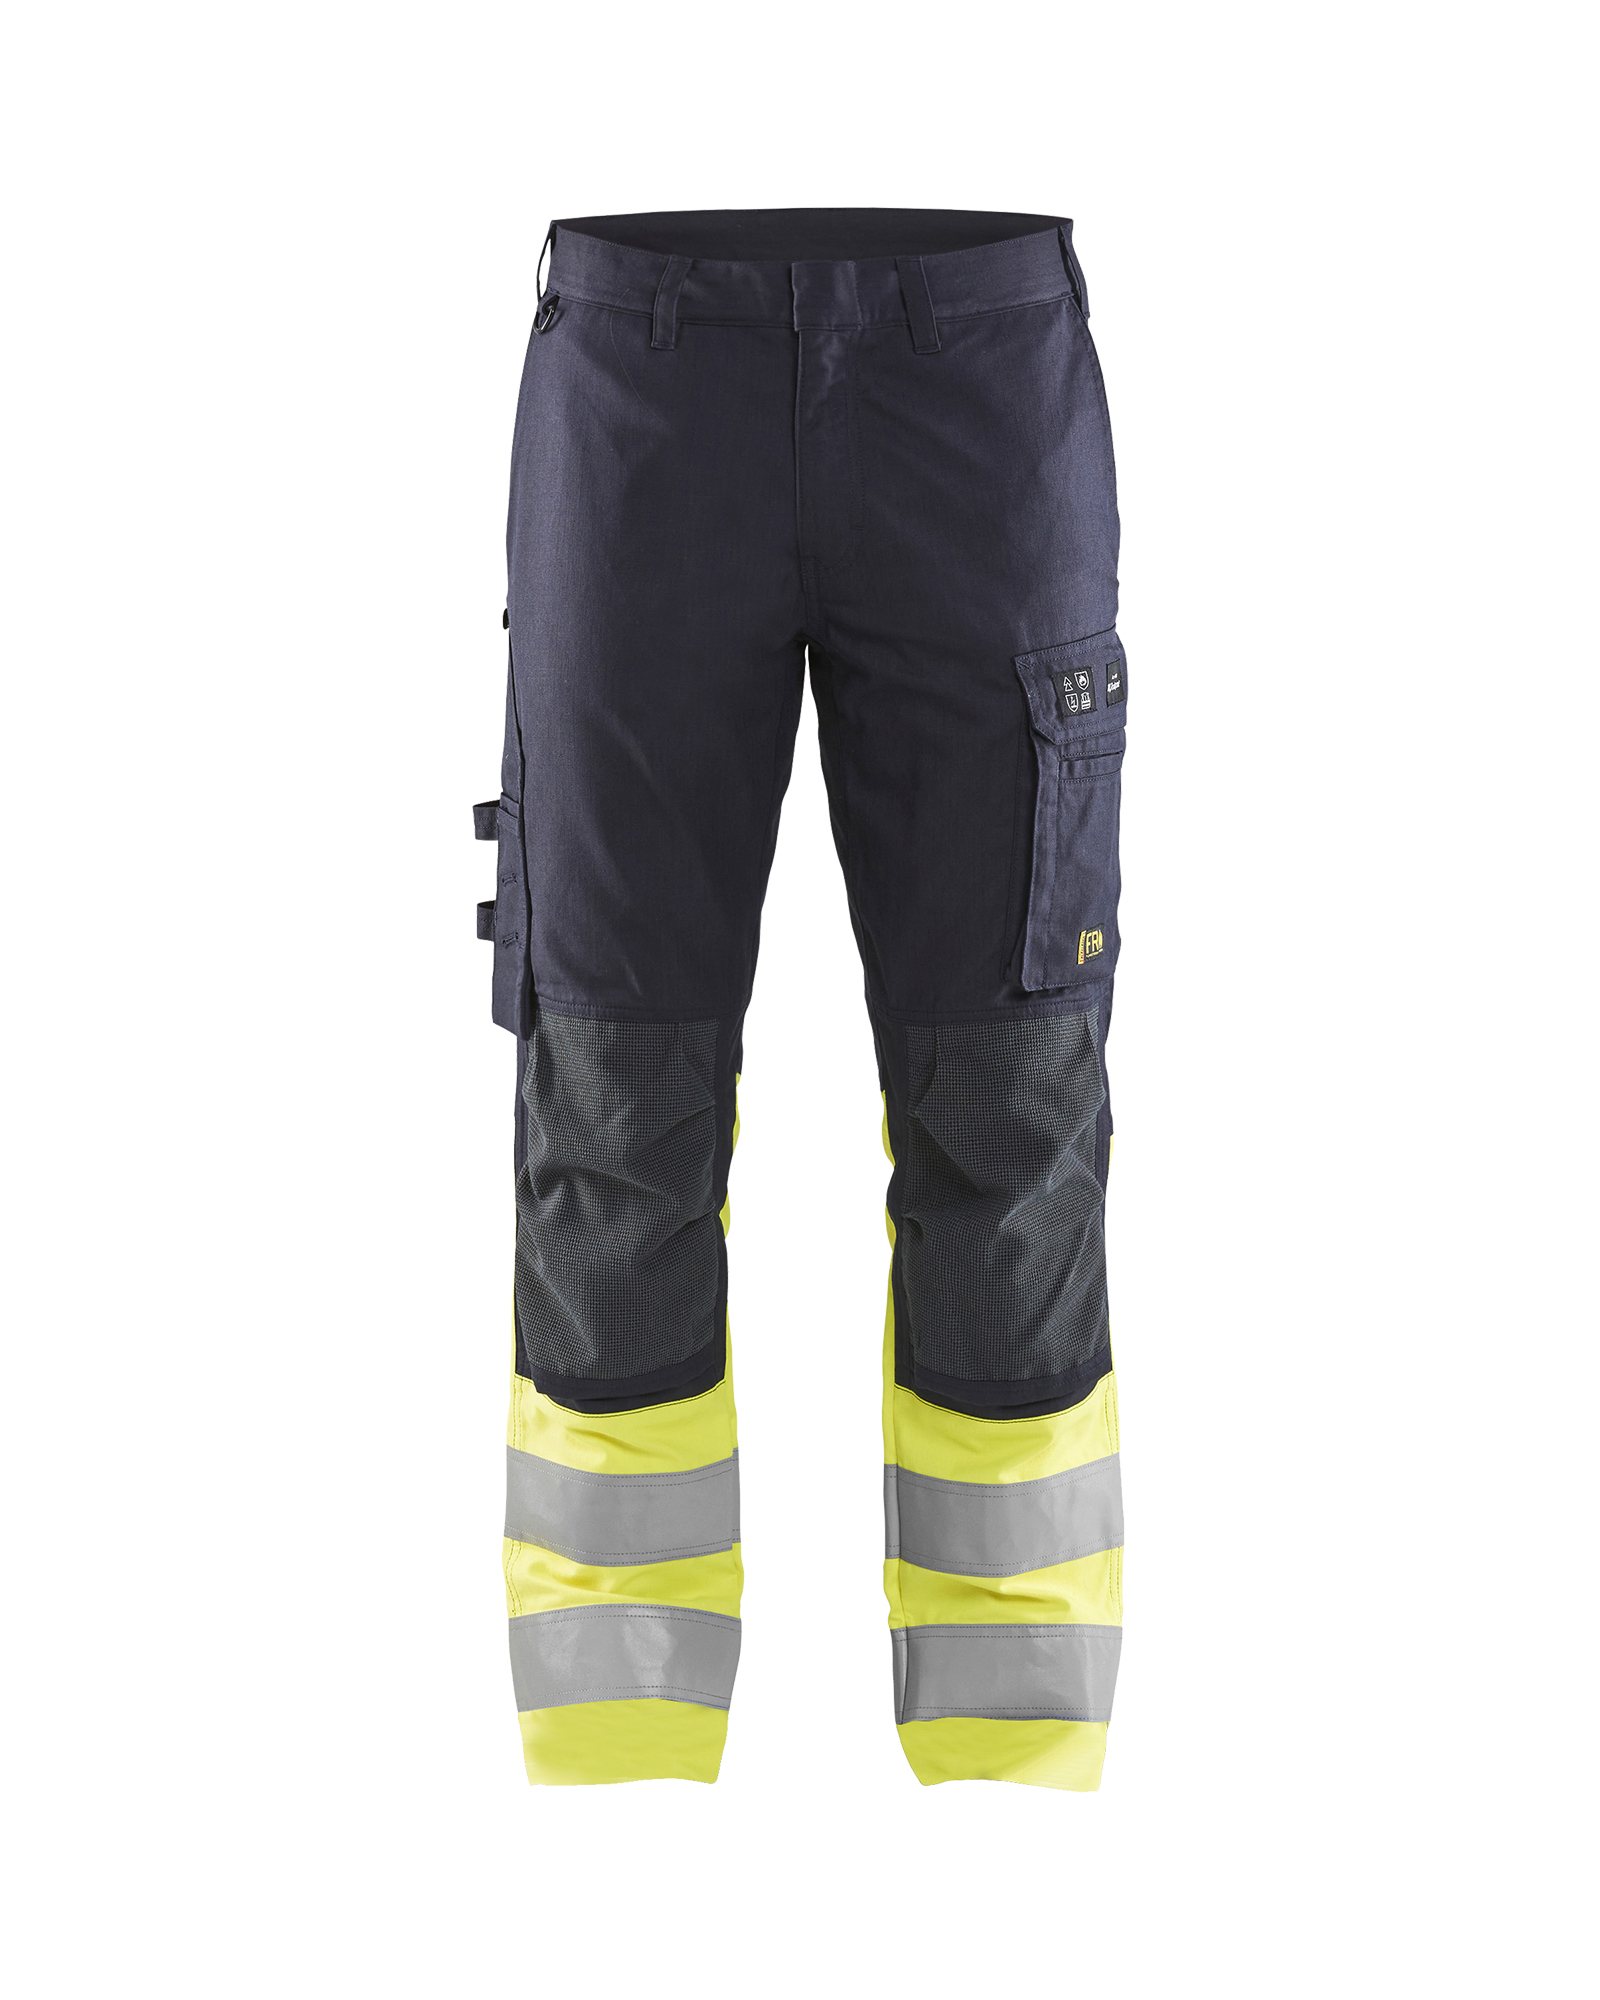 Pantalon multinormes inhérent +stretch Blåkläder 1787 Marine/Jaune fluo Blaklader - 178715128933C